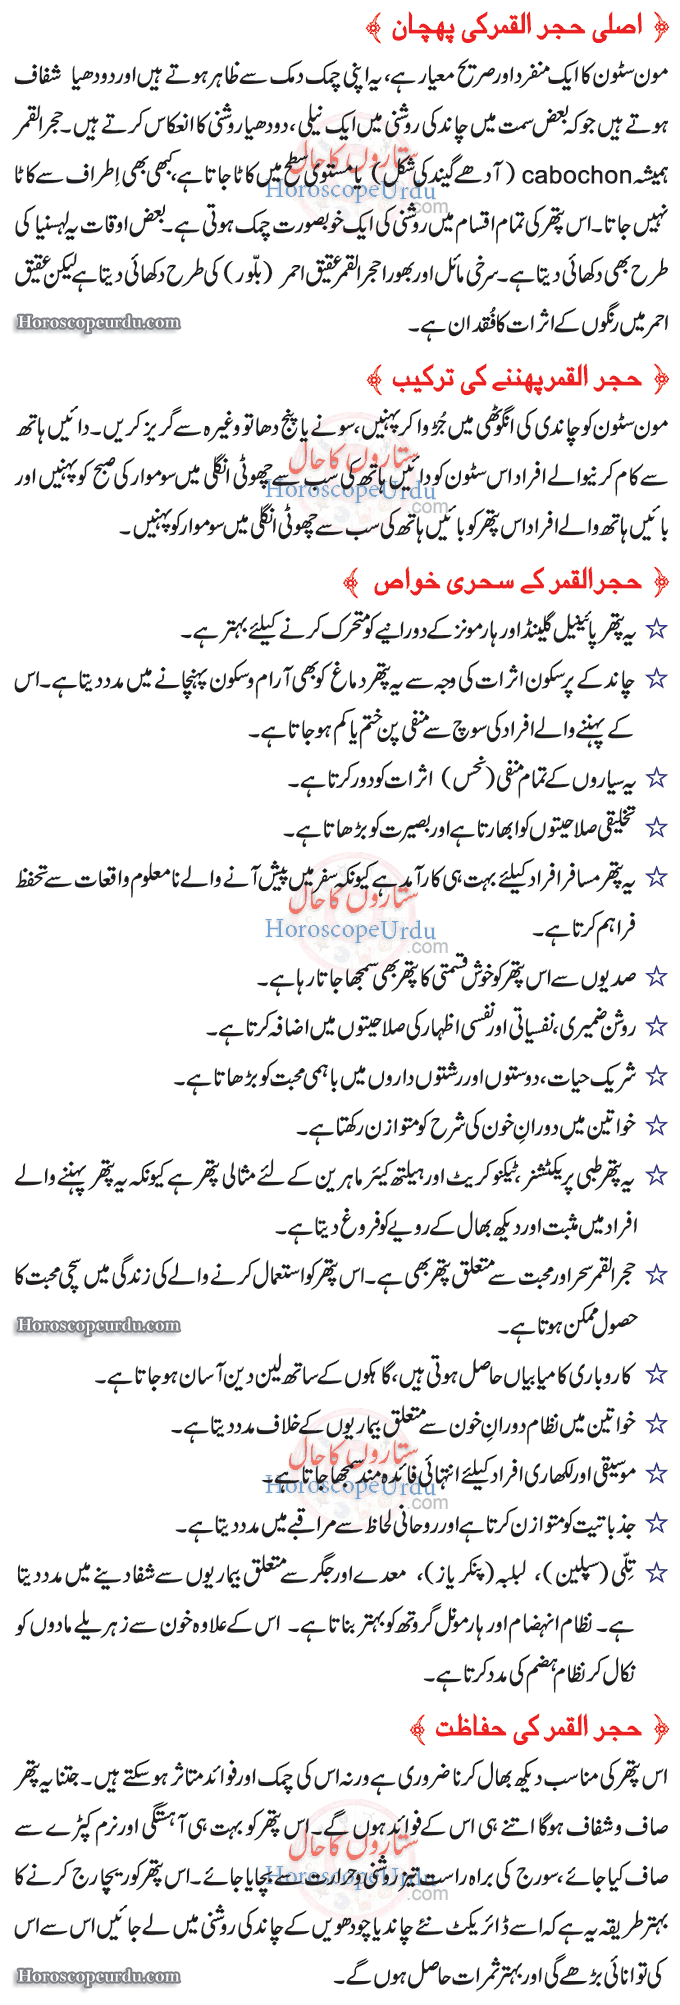 Moonstone Information in Urdu